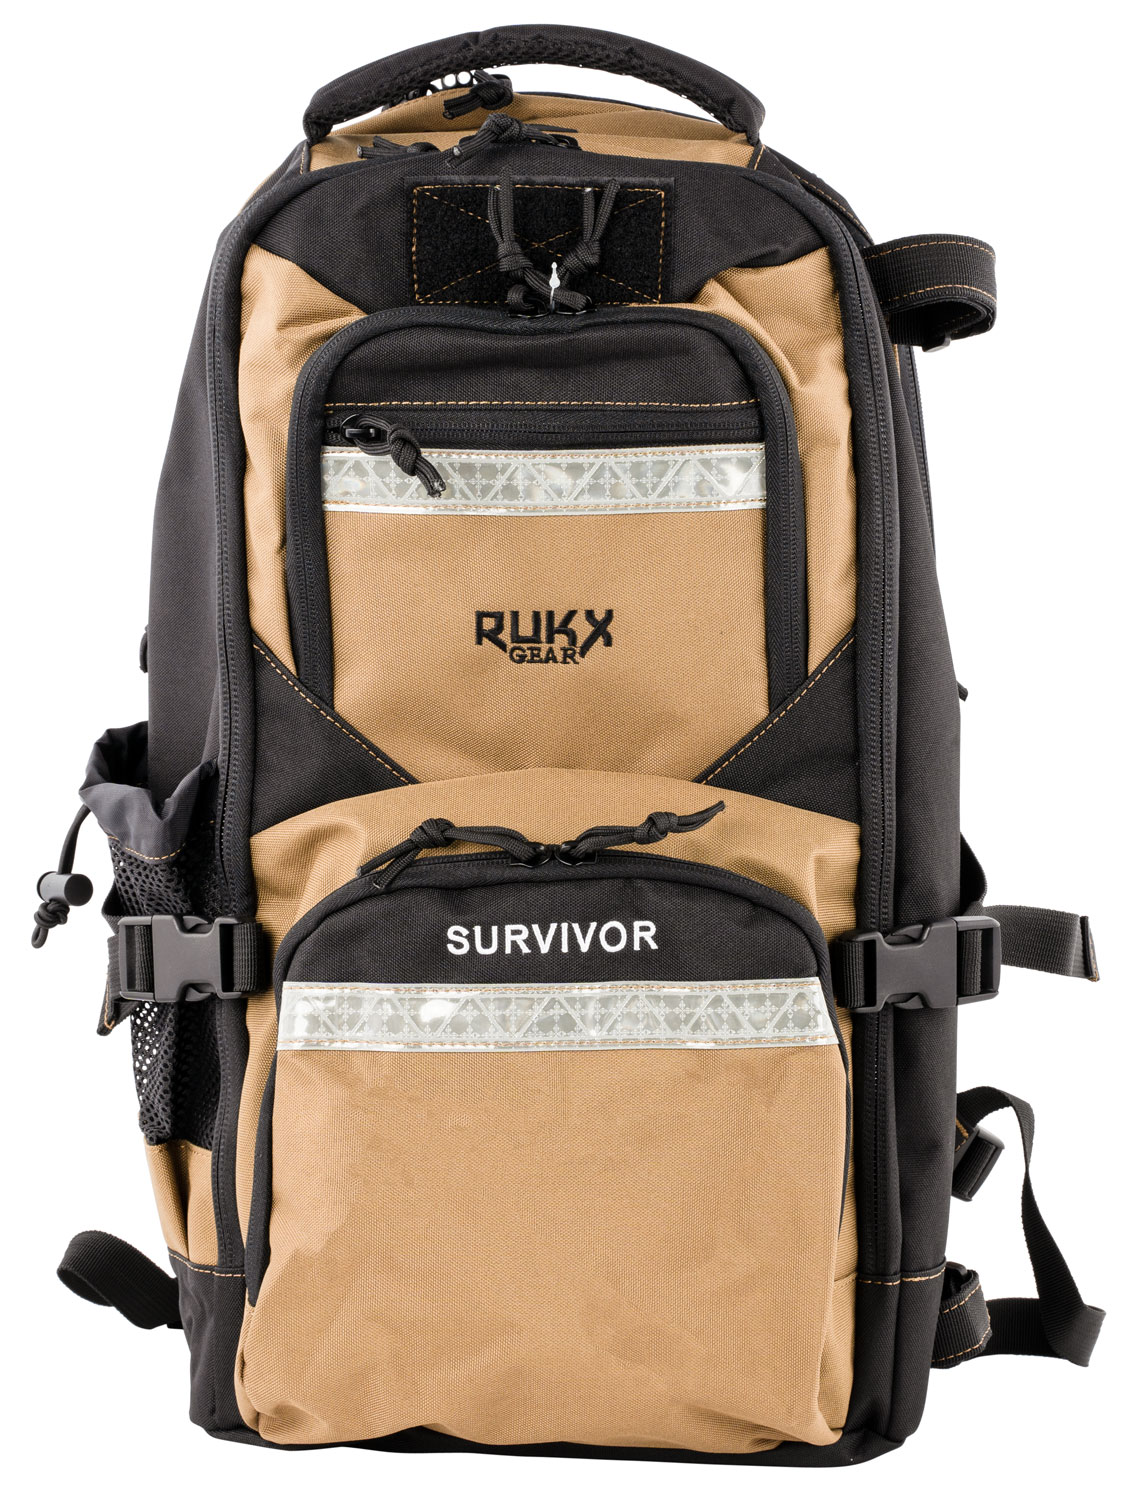 ATI Rukx Gear Survivor Backpack - Tan